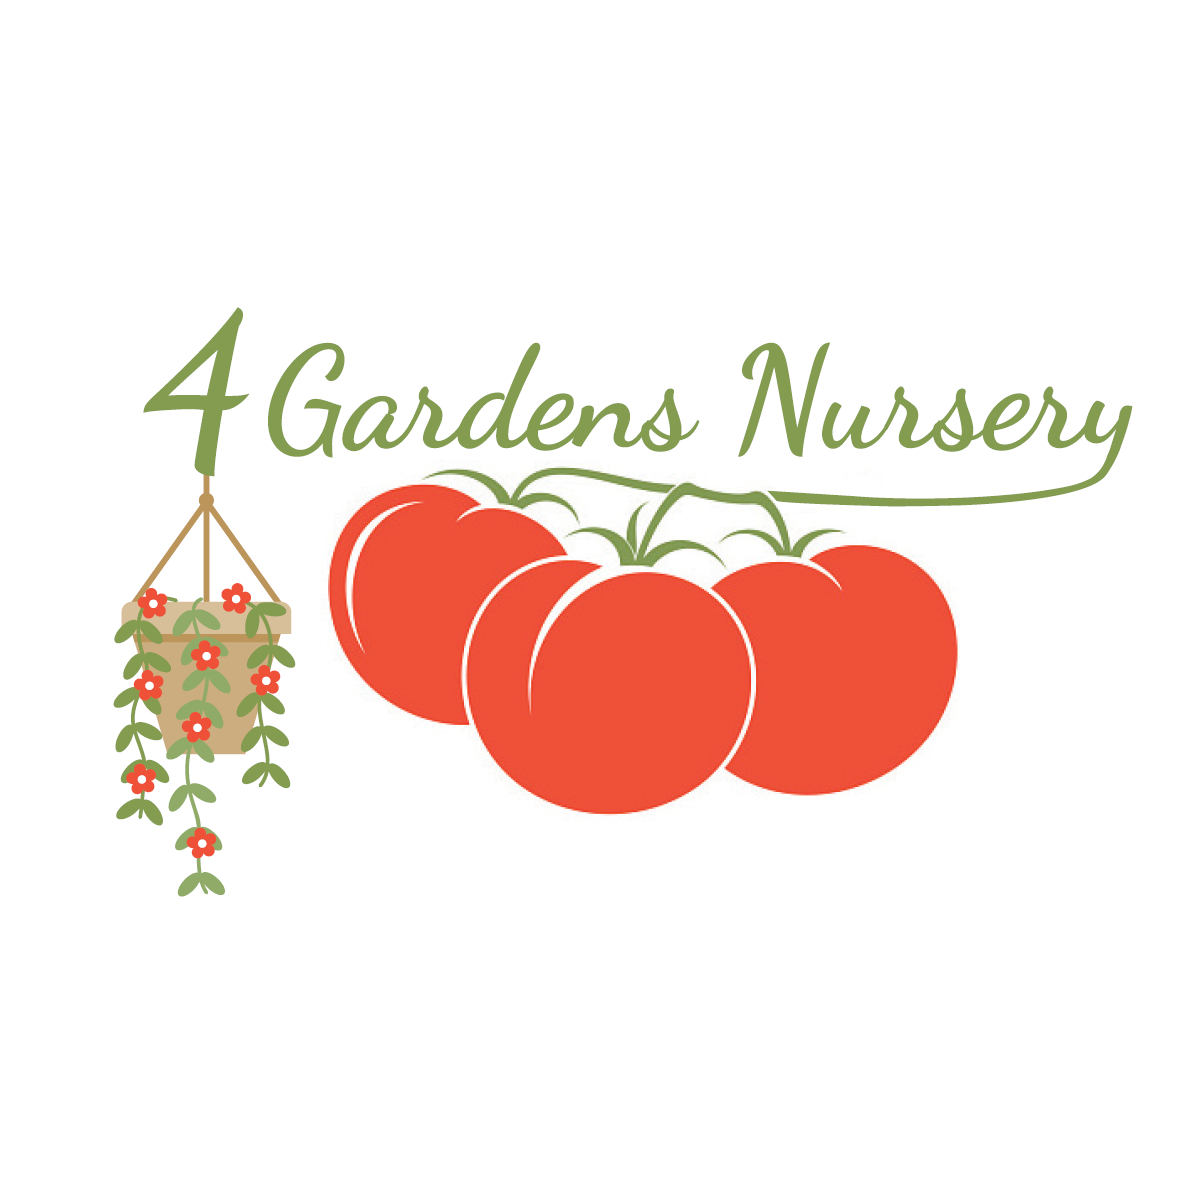 4 Gardens Nursery